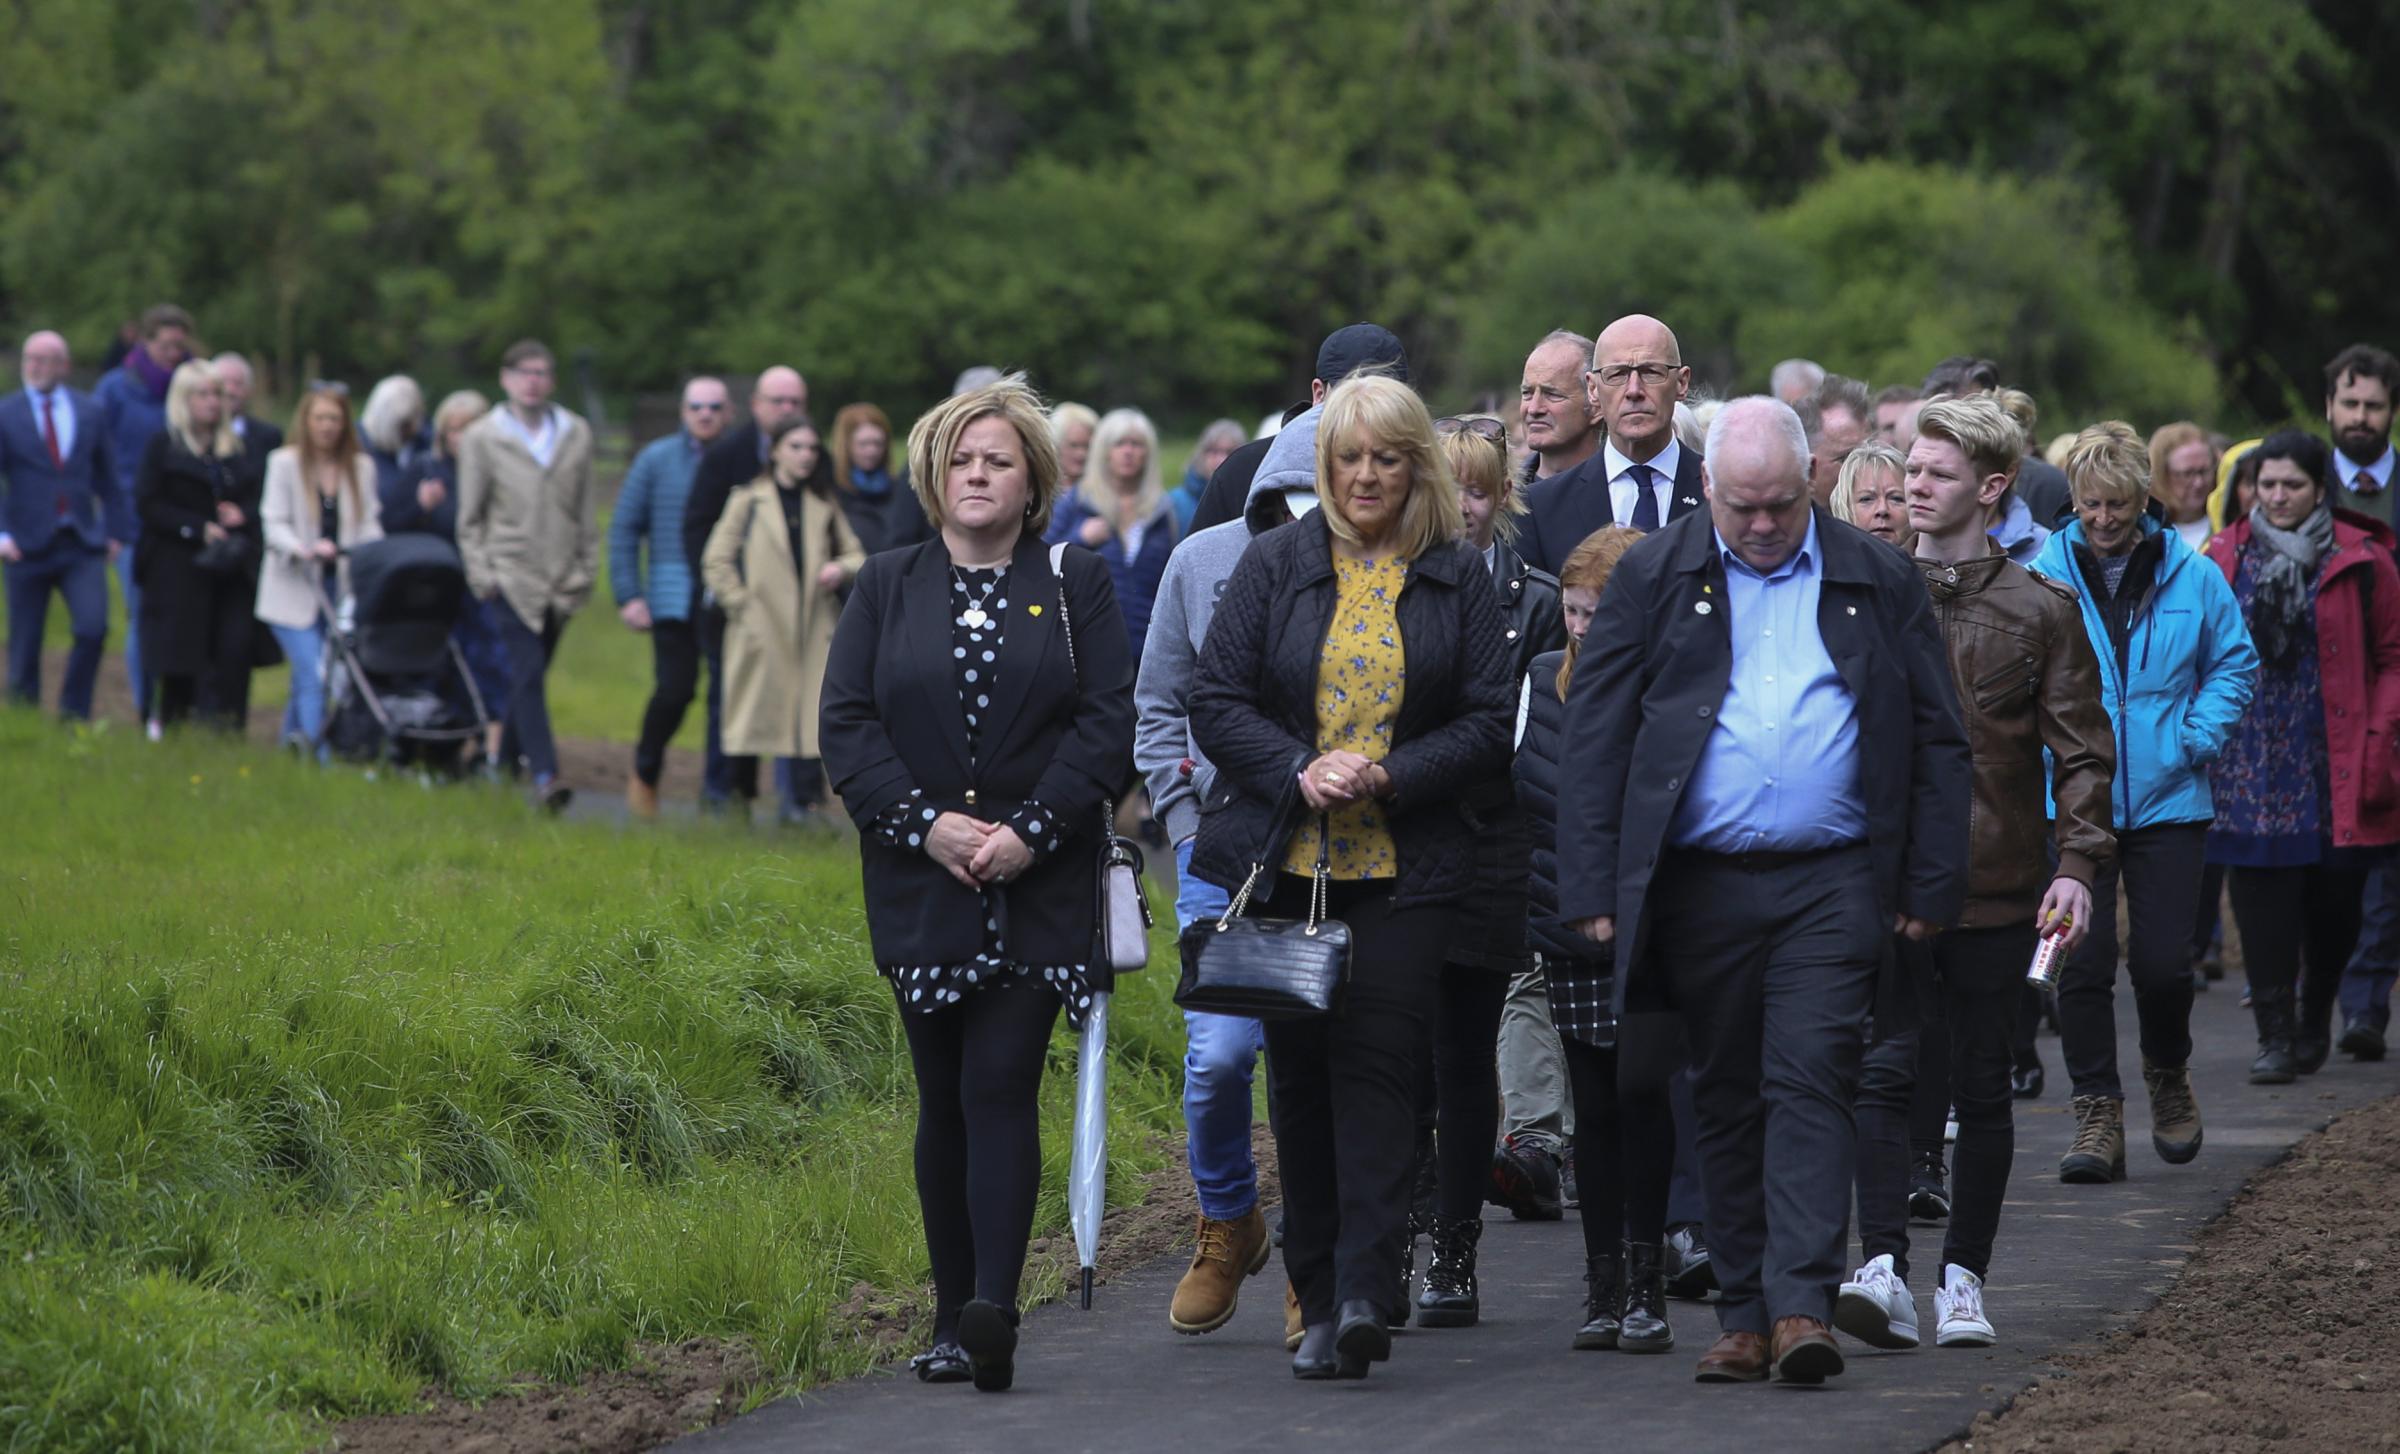 Families on a silent memorial walk